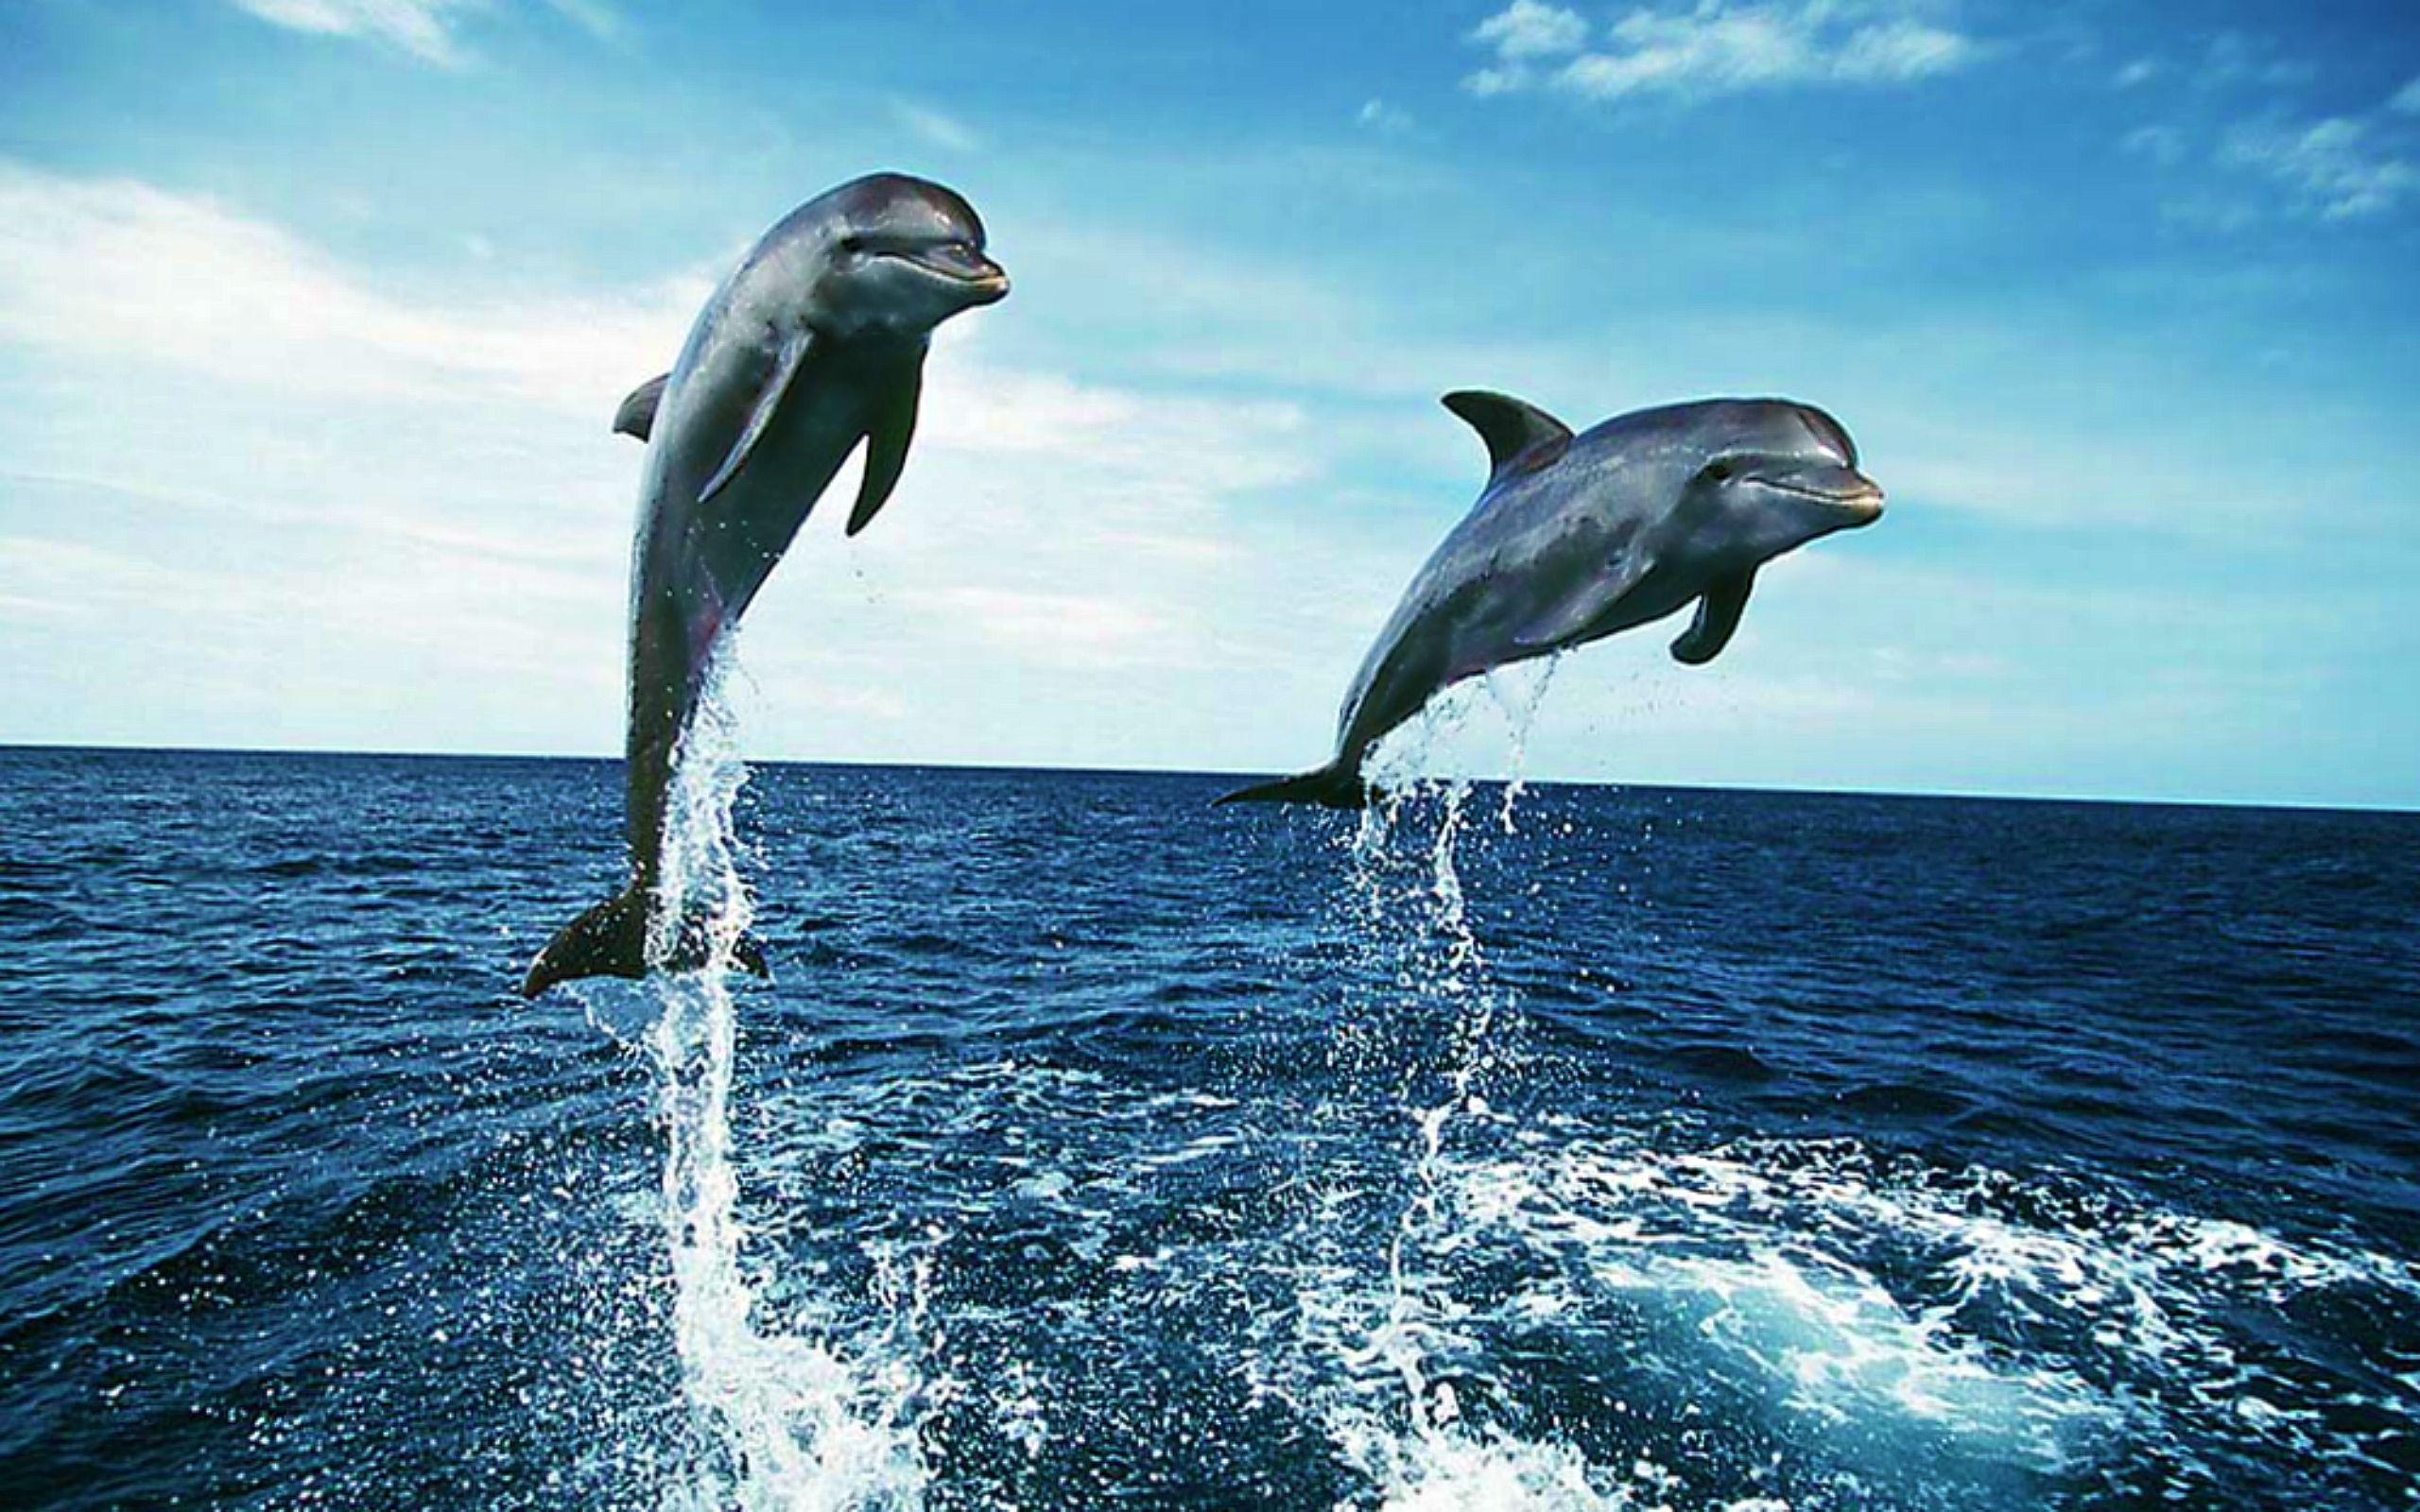 Dolphin Wallpaper Desktop. Dolphin image, Underwater